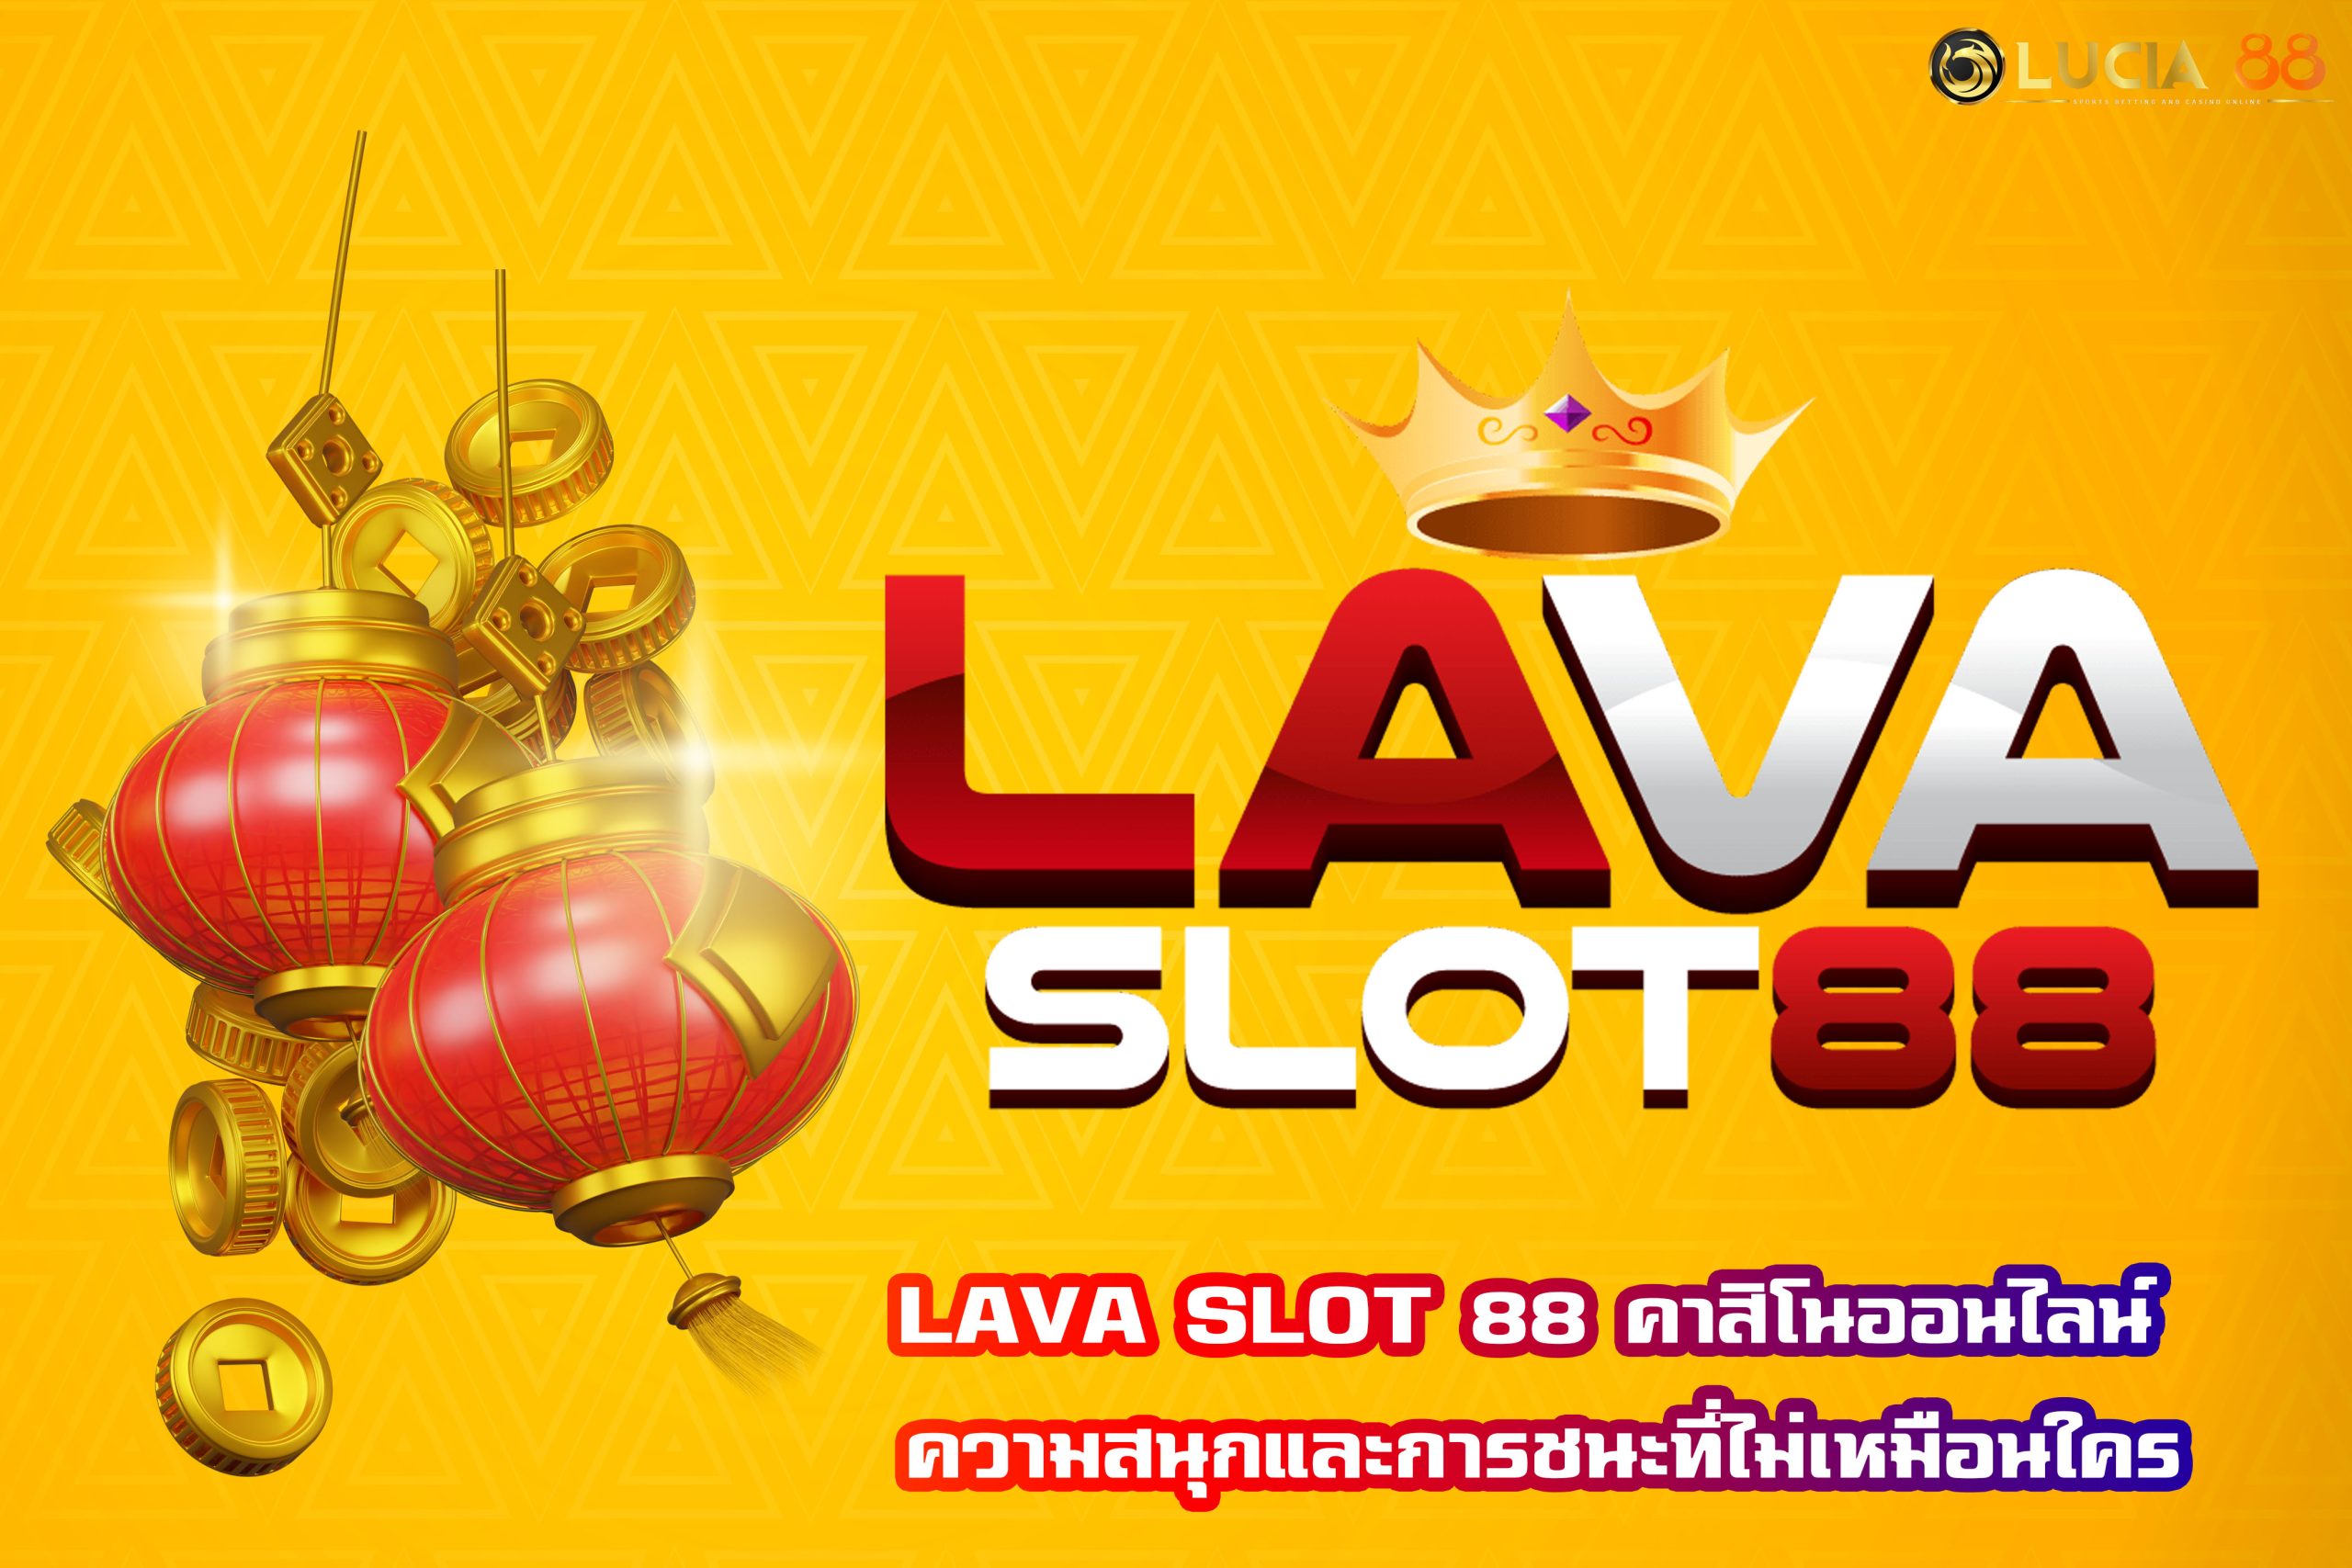 LAVA SLOT 88 คาสิโนออนไลน์ ความสนุกและการชนะที่ไม่เหมือนใคร